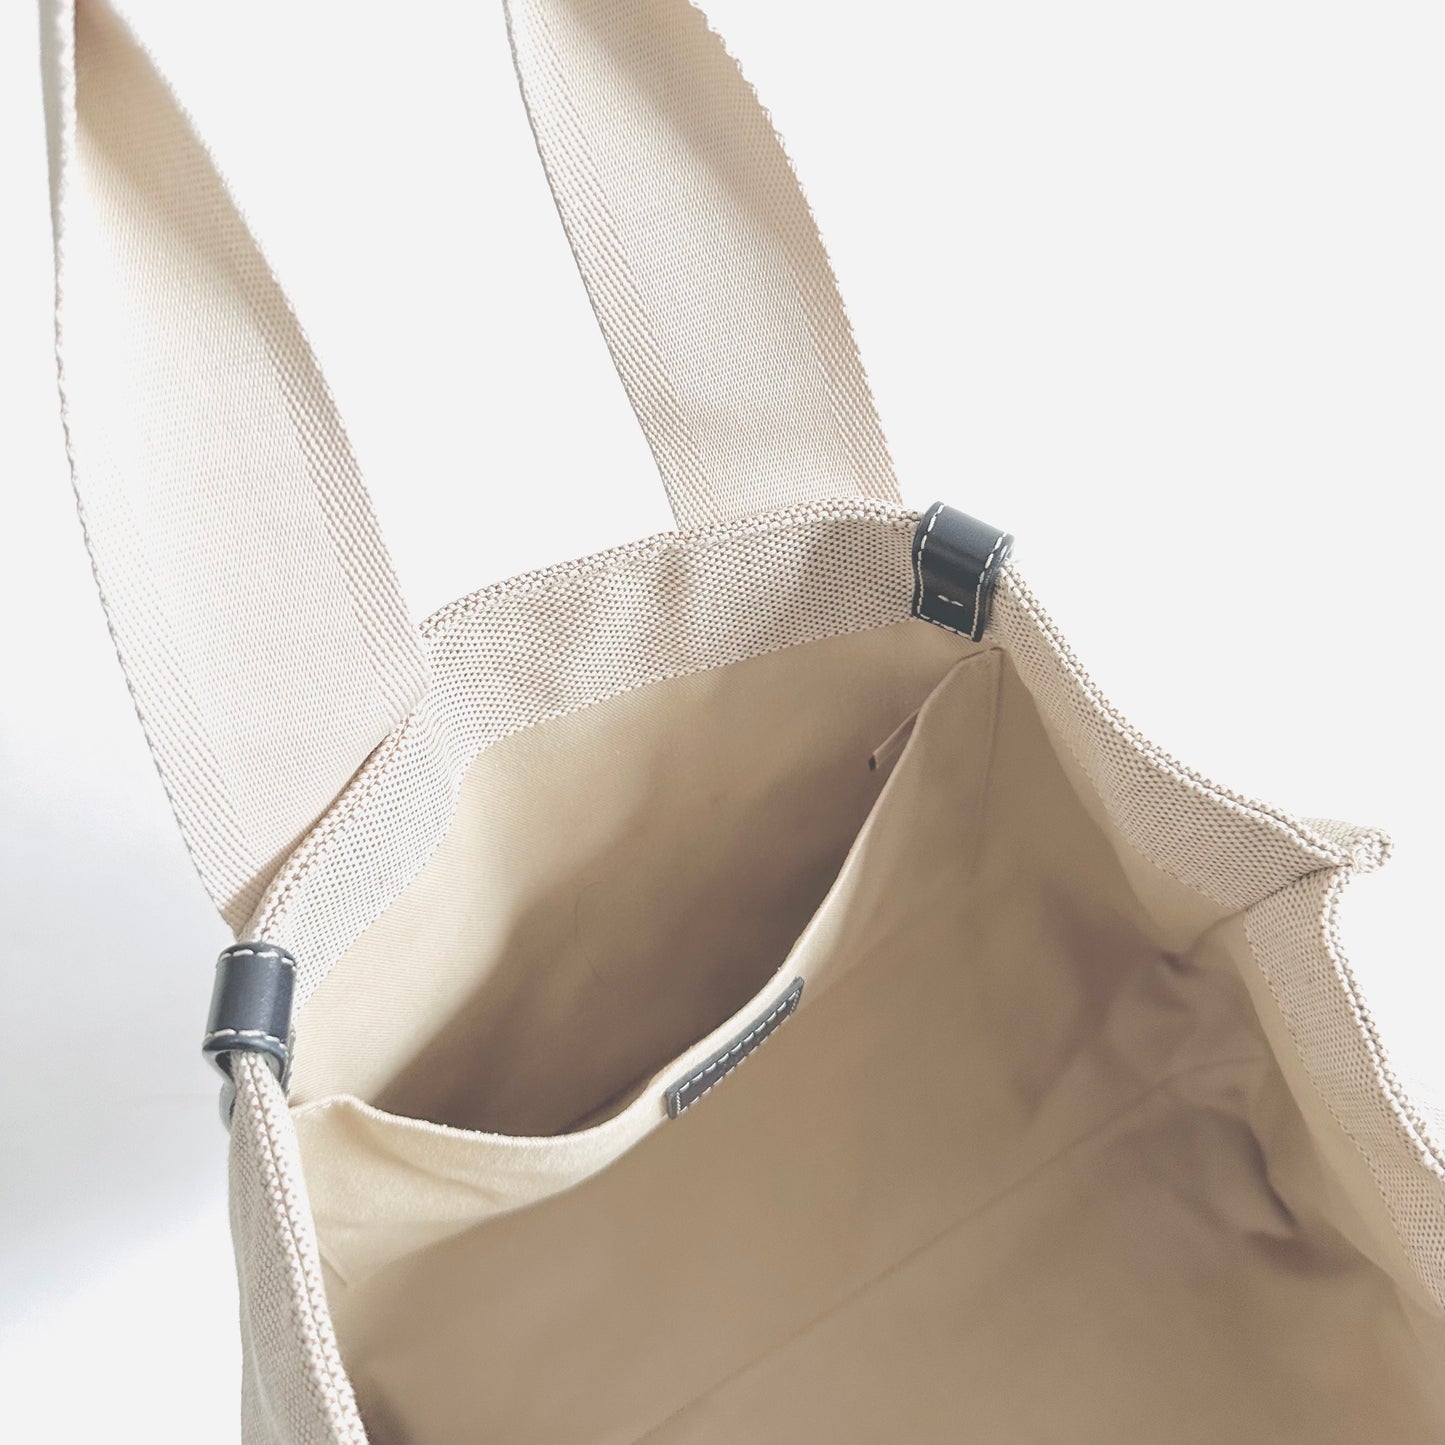 Chloe Woody Beige / Black Monogram Logo Shopper Large Shoulder Tote Bag